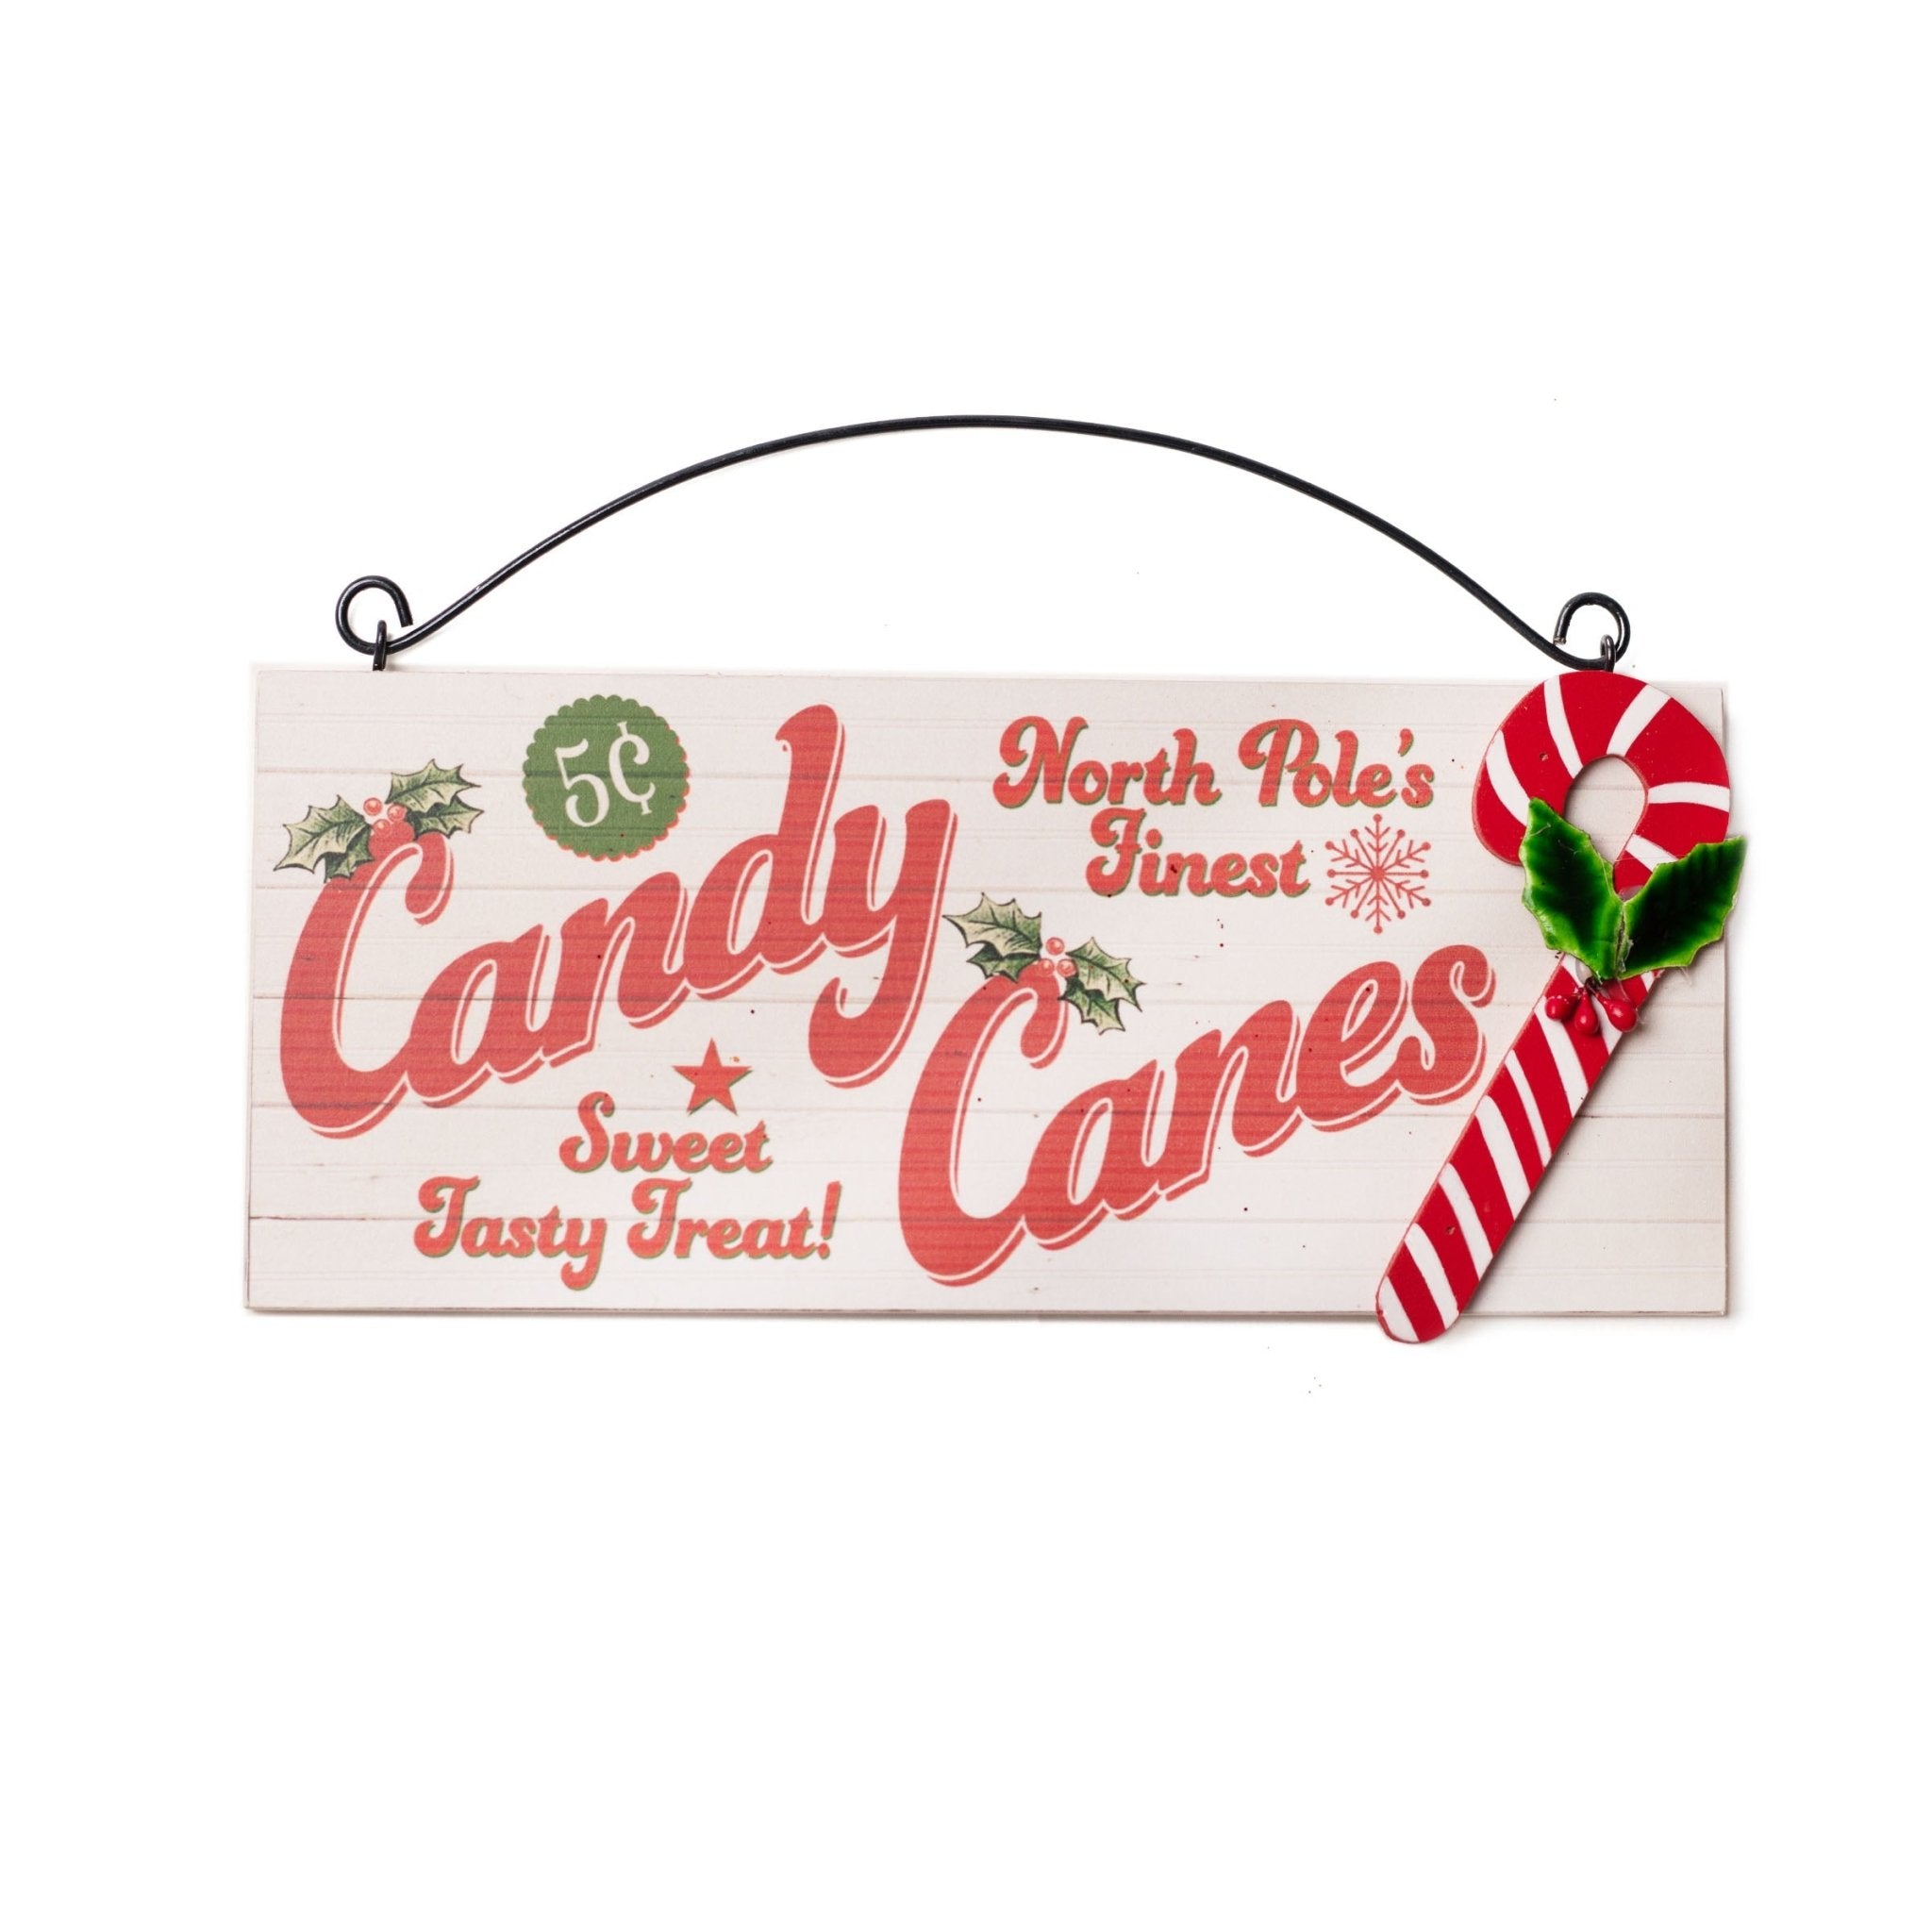 North Poles Finest Candy Cane Sign 8x18cm 0818006 - MODA FLORA Santa's Workshop